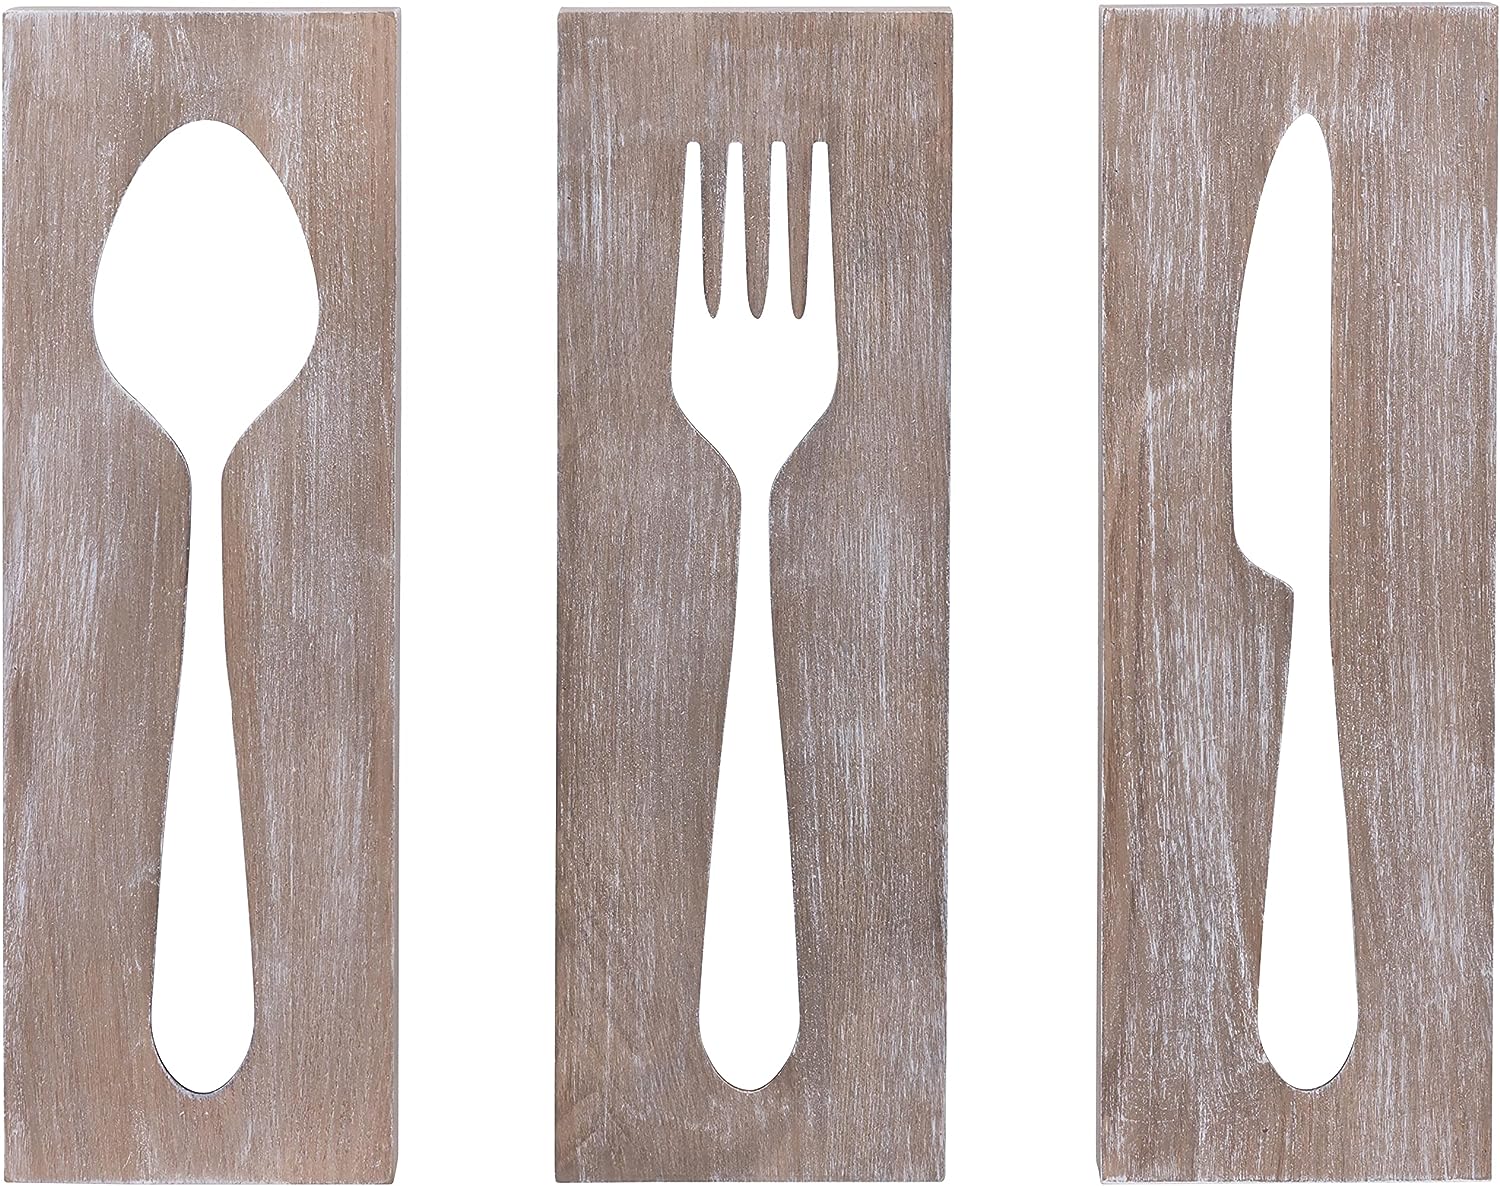 Rustic Plank Art: "Cutlery Set"